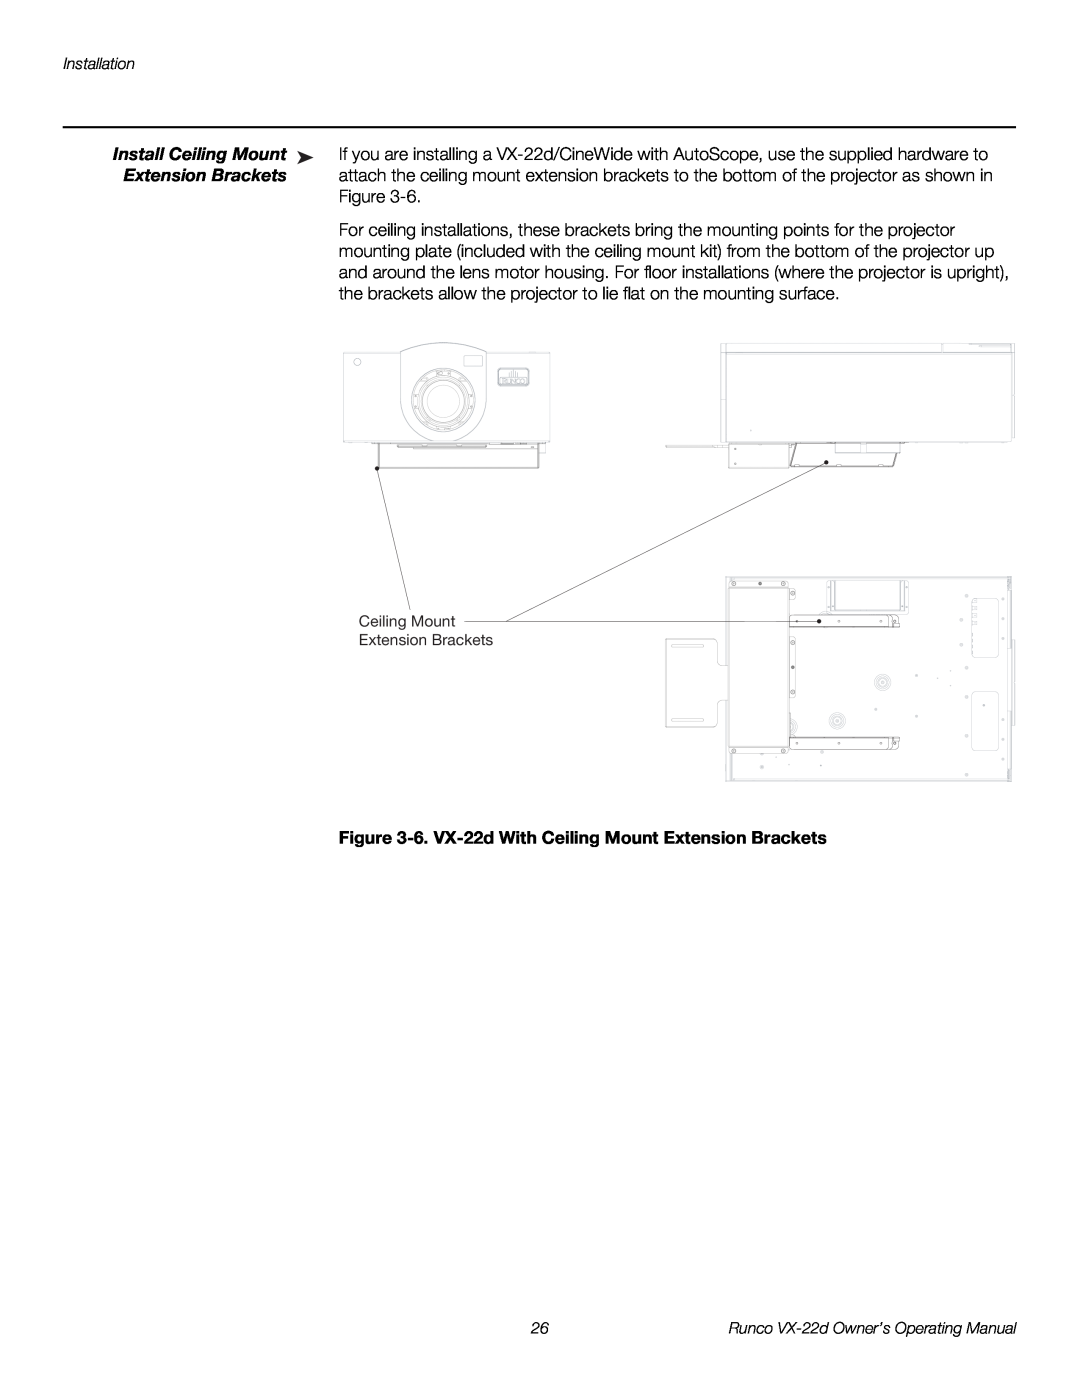 Runco VX-22D manual Install Ceiling Mount, 6. VX-22d With Ceiling Mount Extension Brackets 